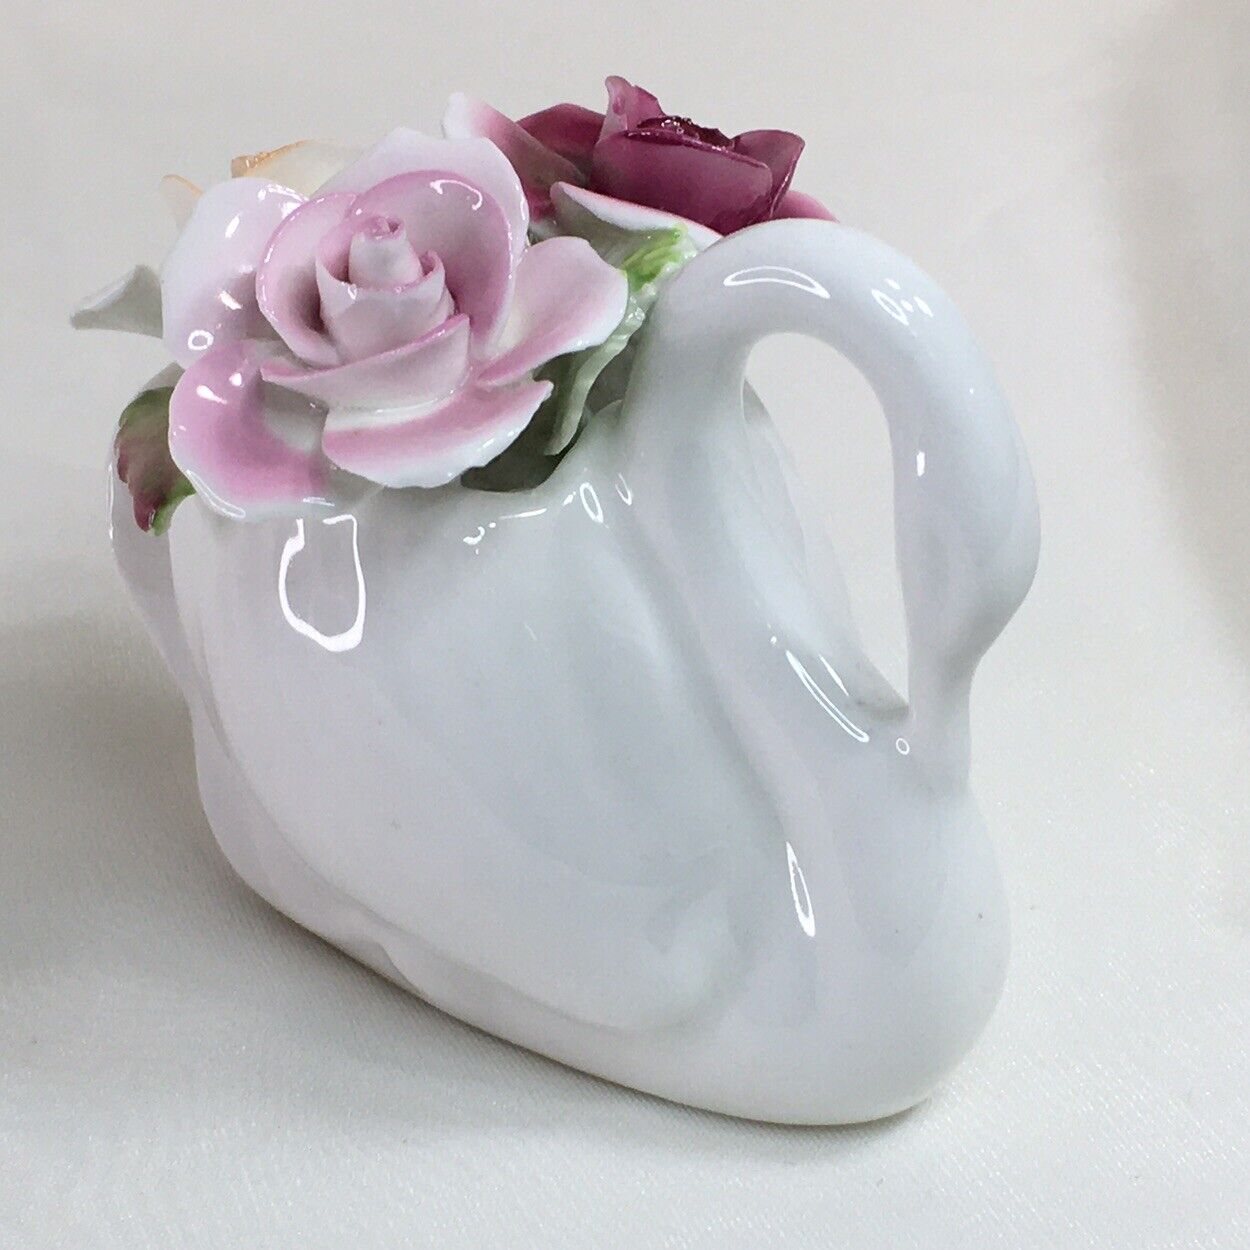 3.25” Swan & Roses Figurine, Vintage, Staffordshire England, Royale Stratford❤️